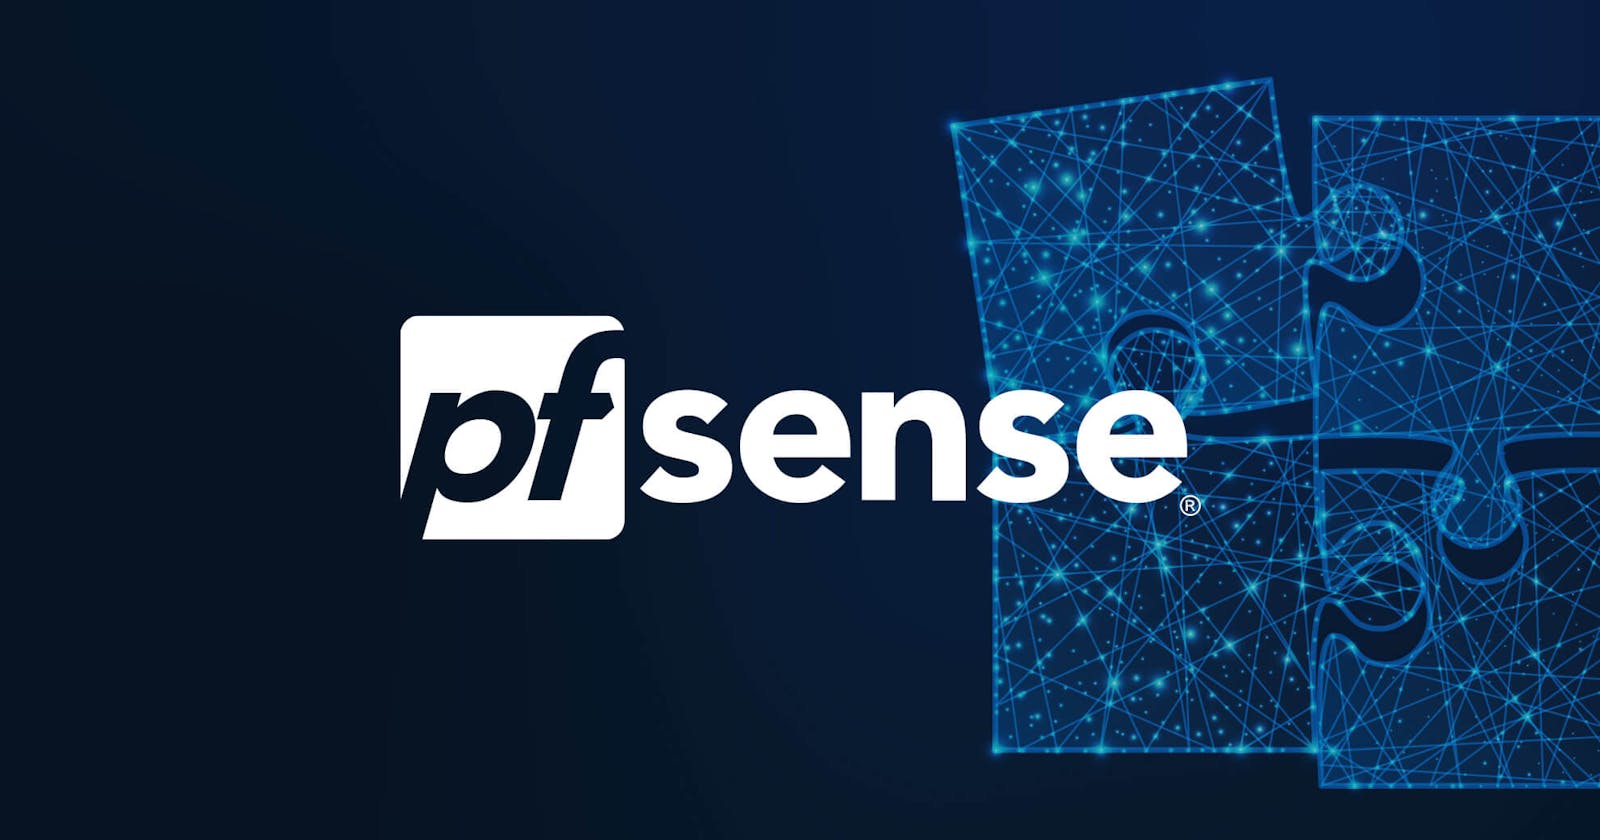 Port forwarding using Pfsense firewall